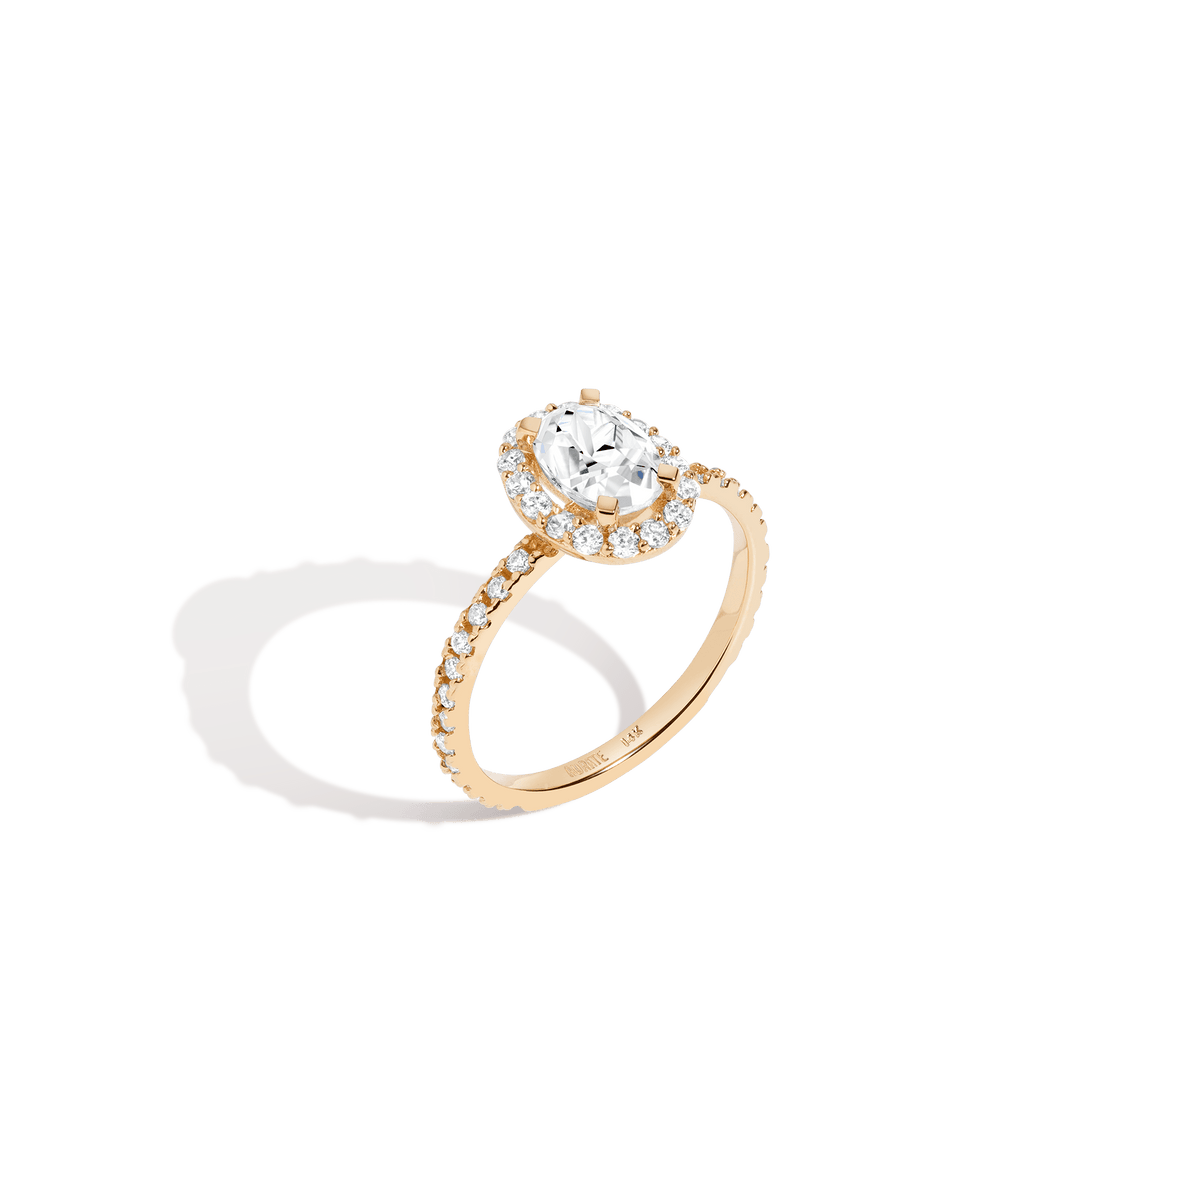 Millenial Ring by Sampat Jewelers Inc.